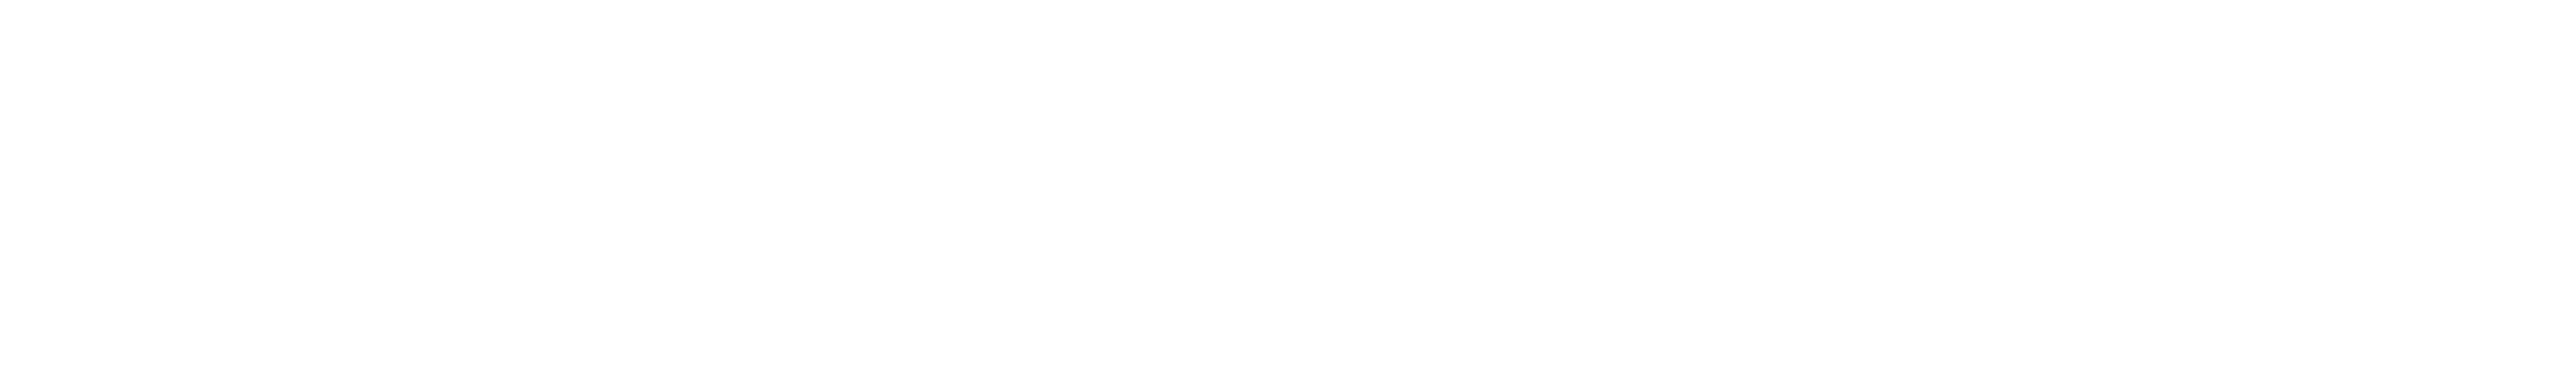 New Zealand Government Te Kāwanatanga